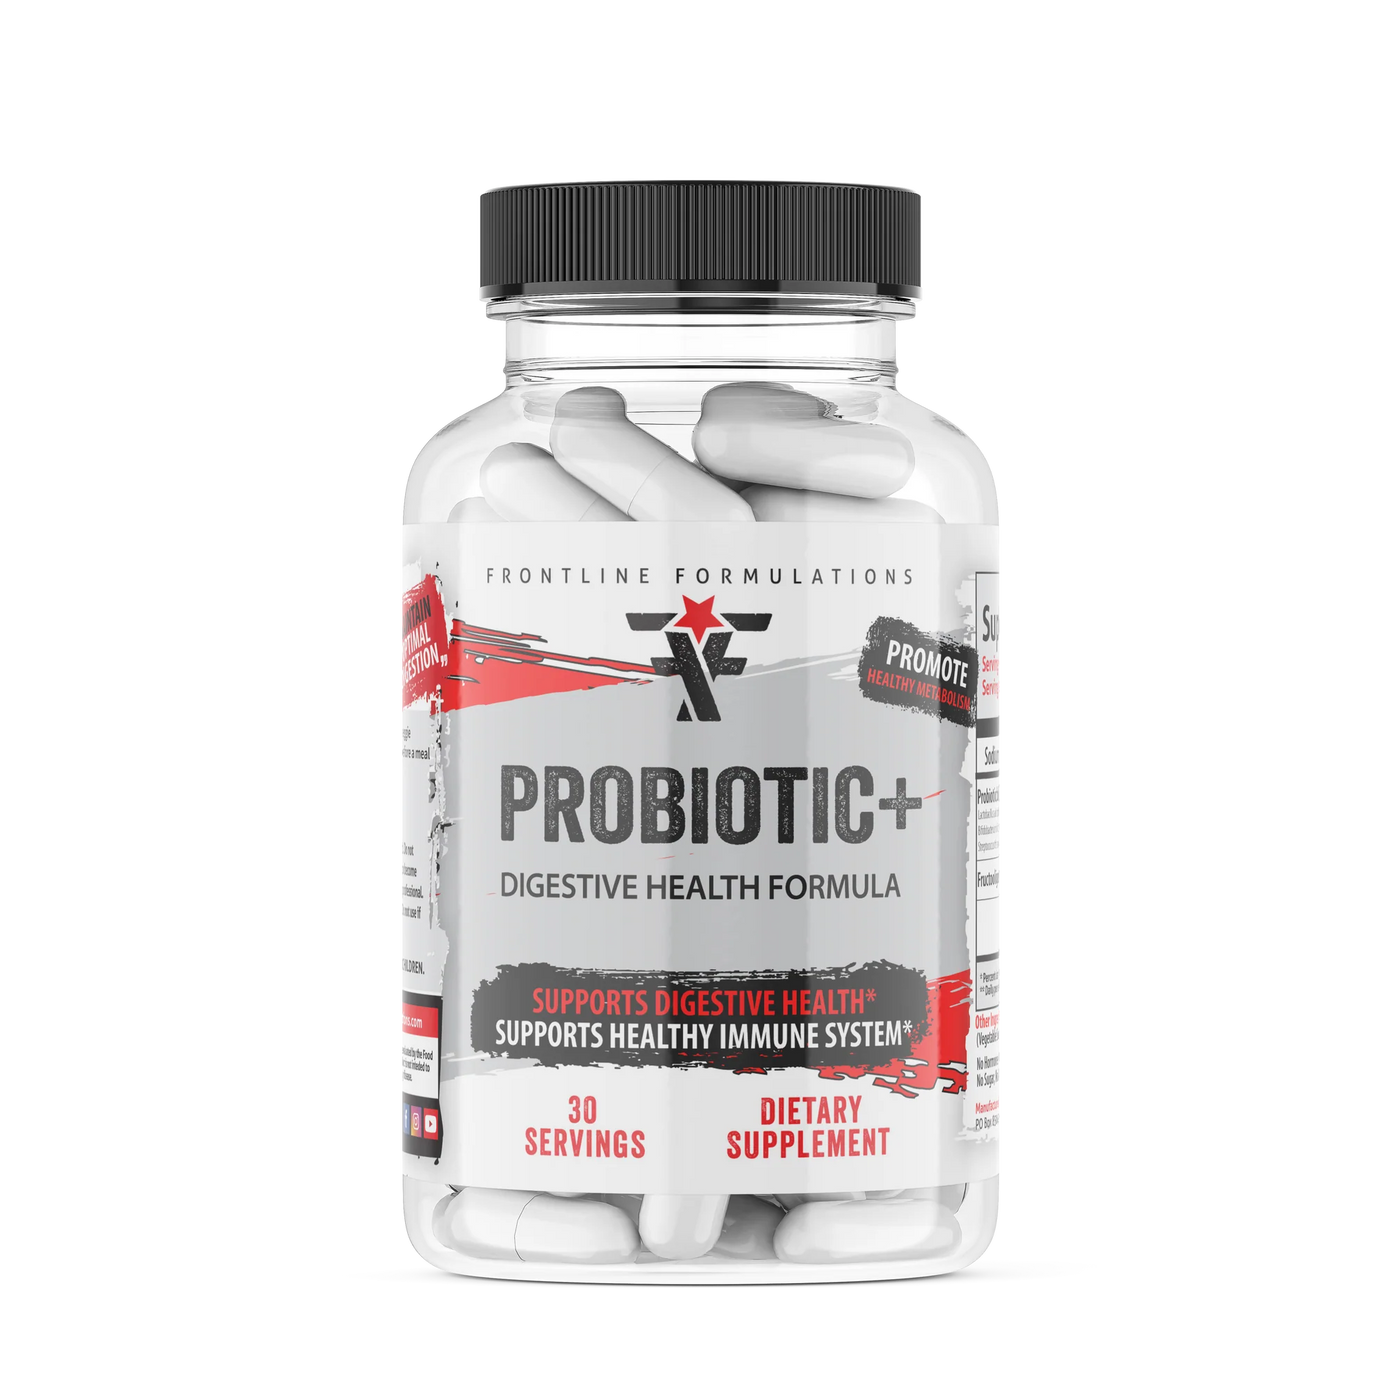 Frontline Formulations | Probiotic+